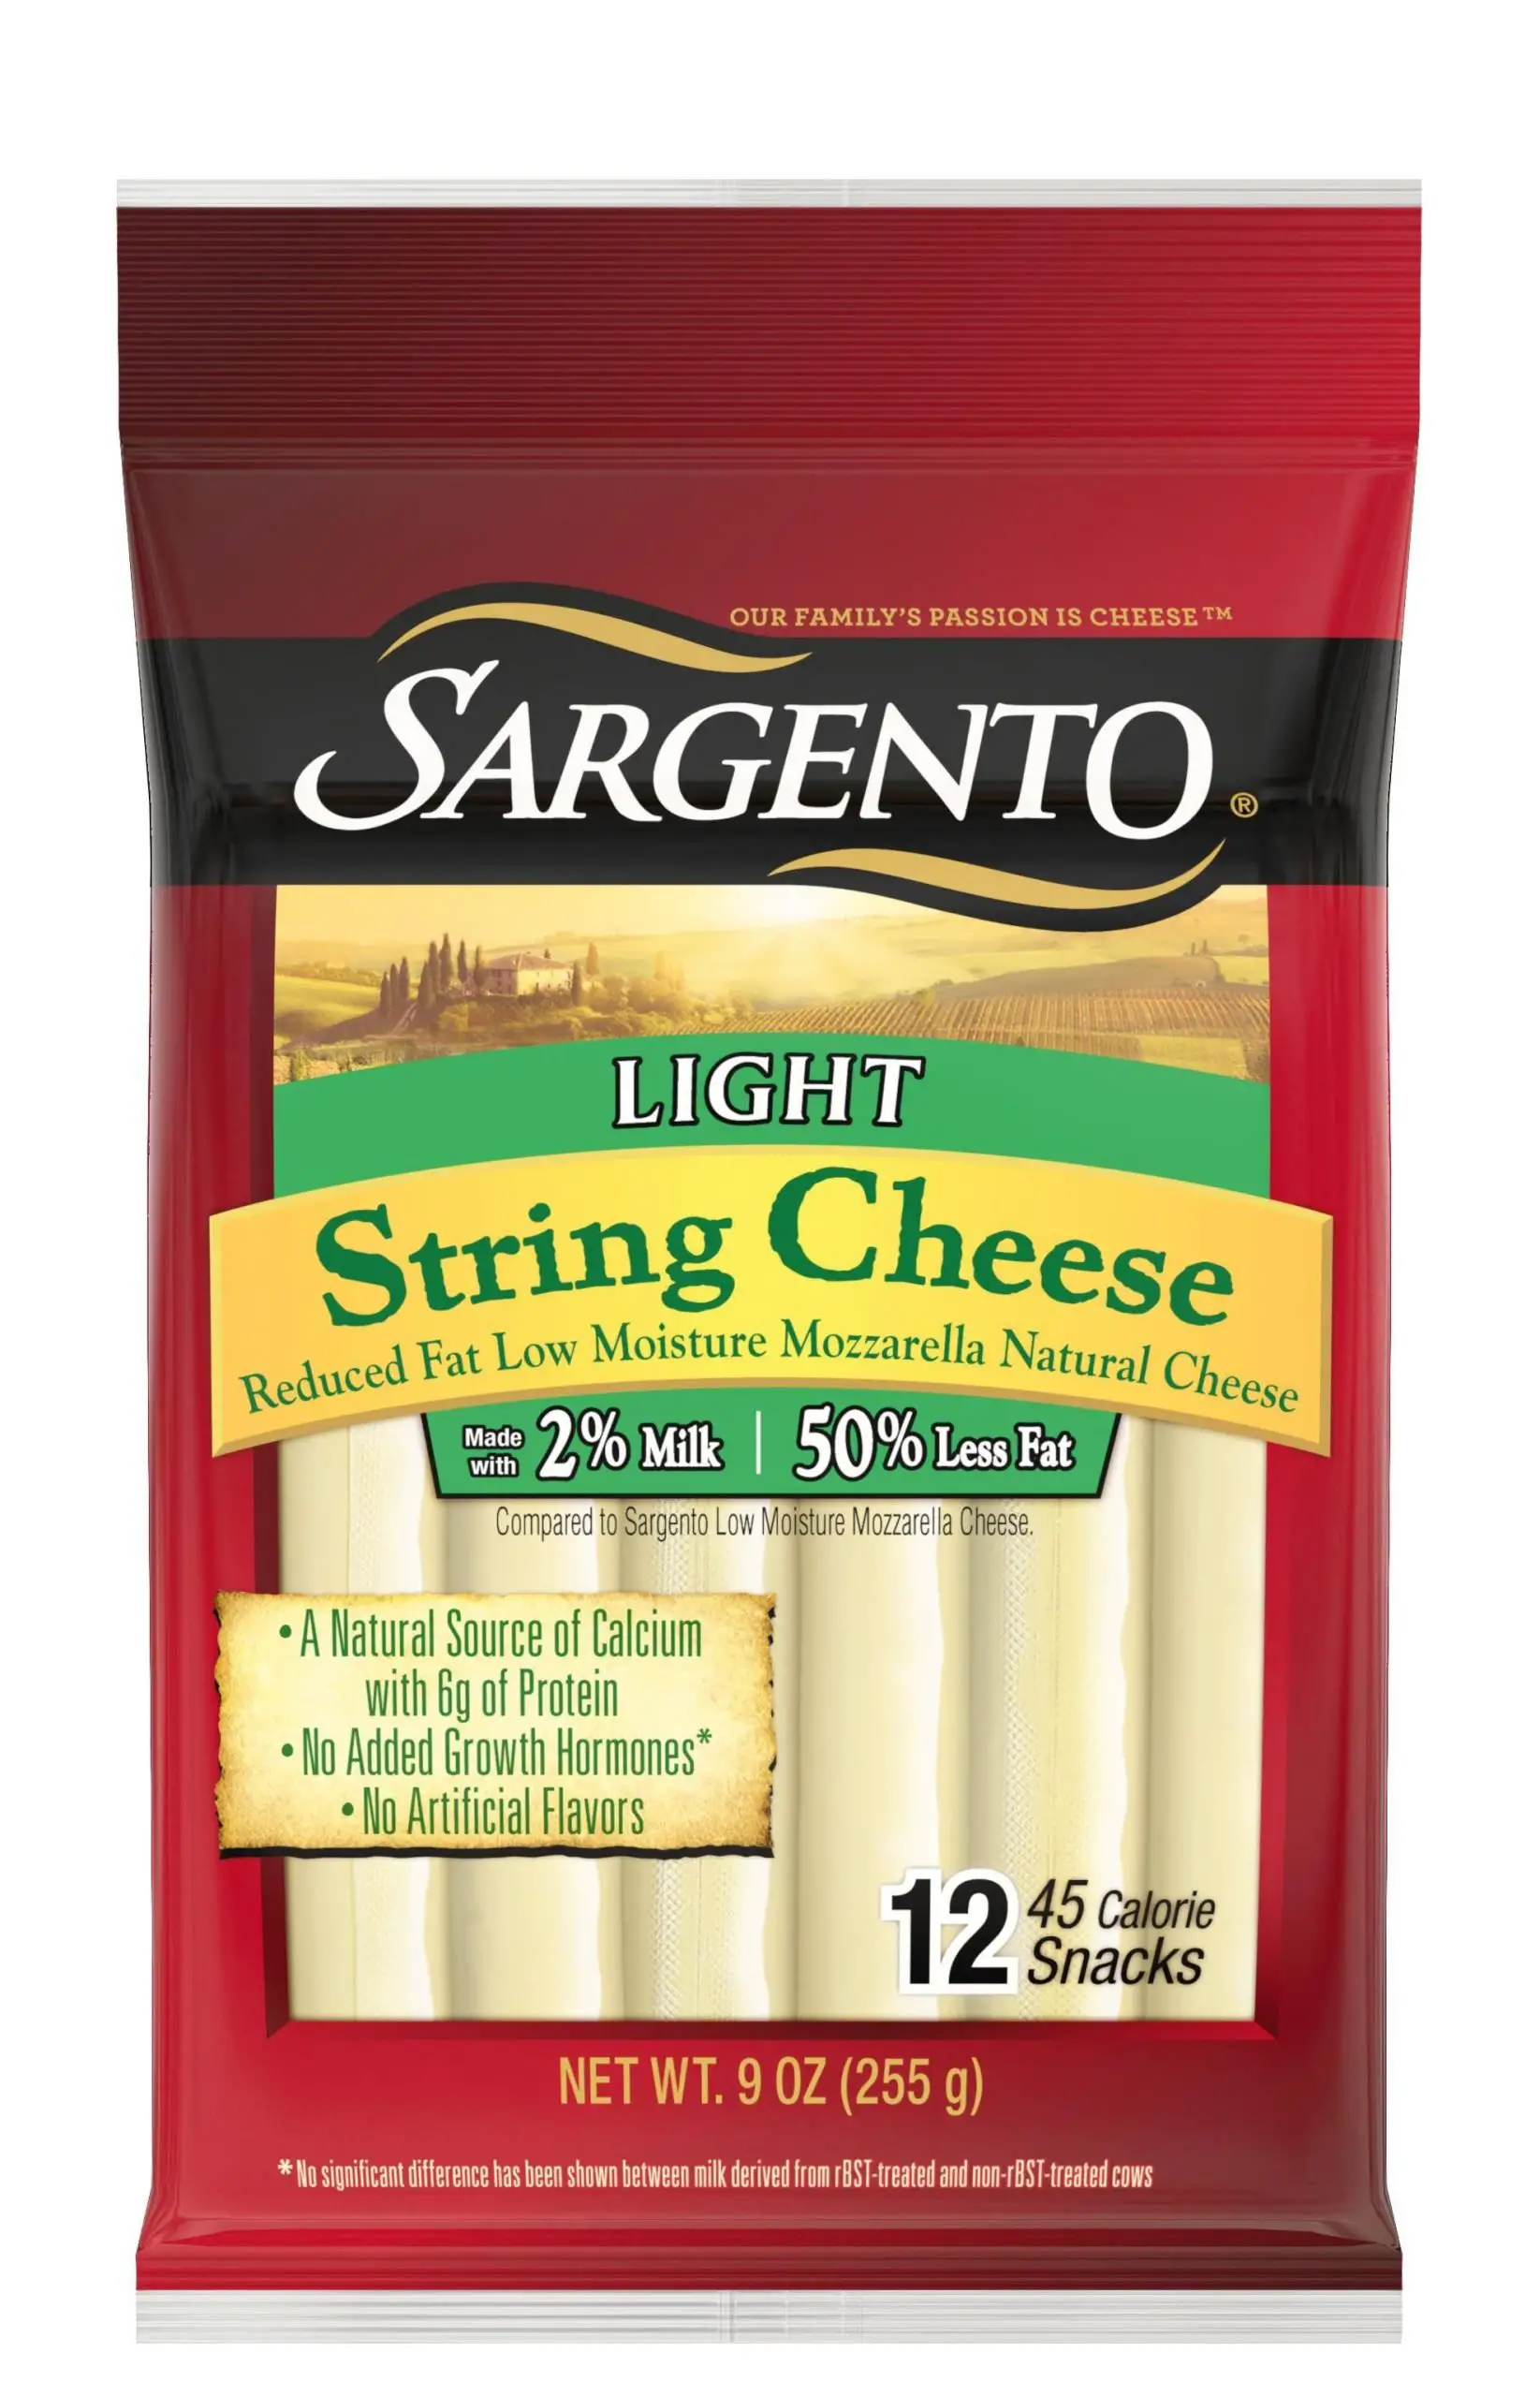 45 calorie Sargento light mozzarella cheese sticks : 1200isplenty